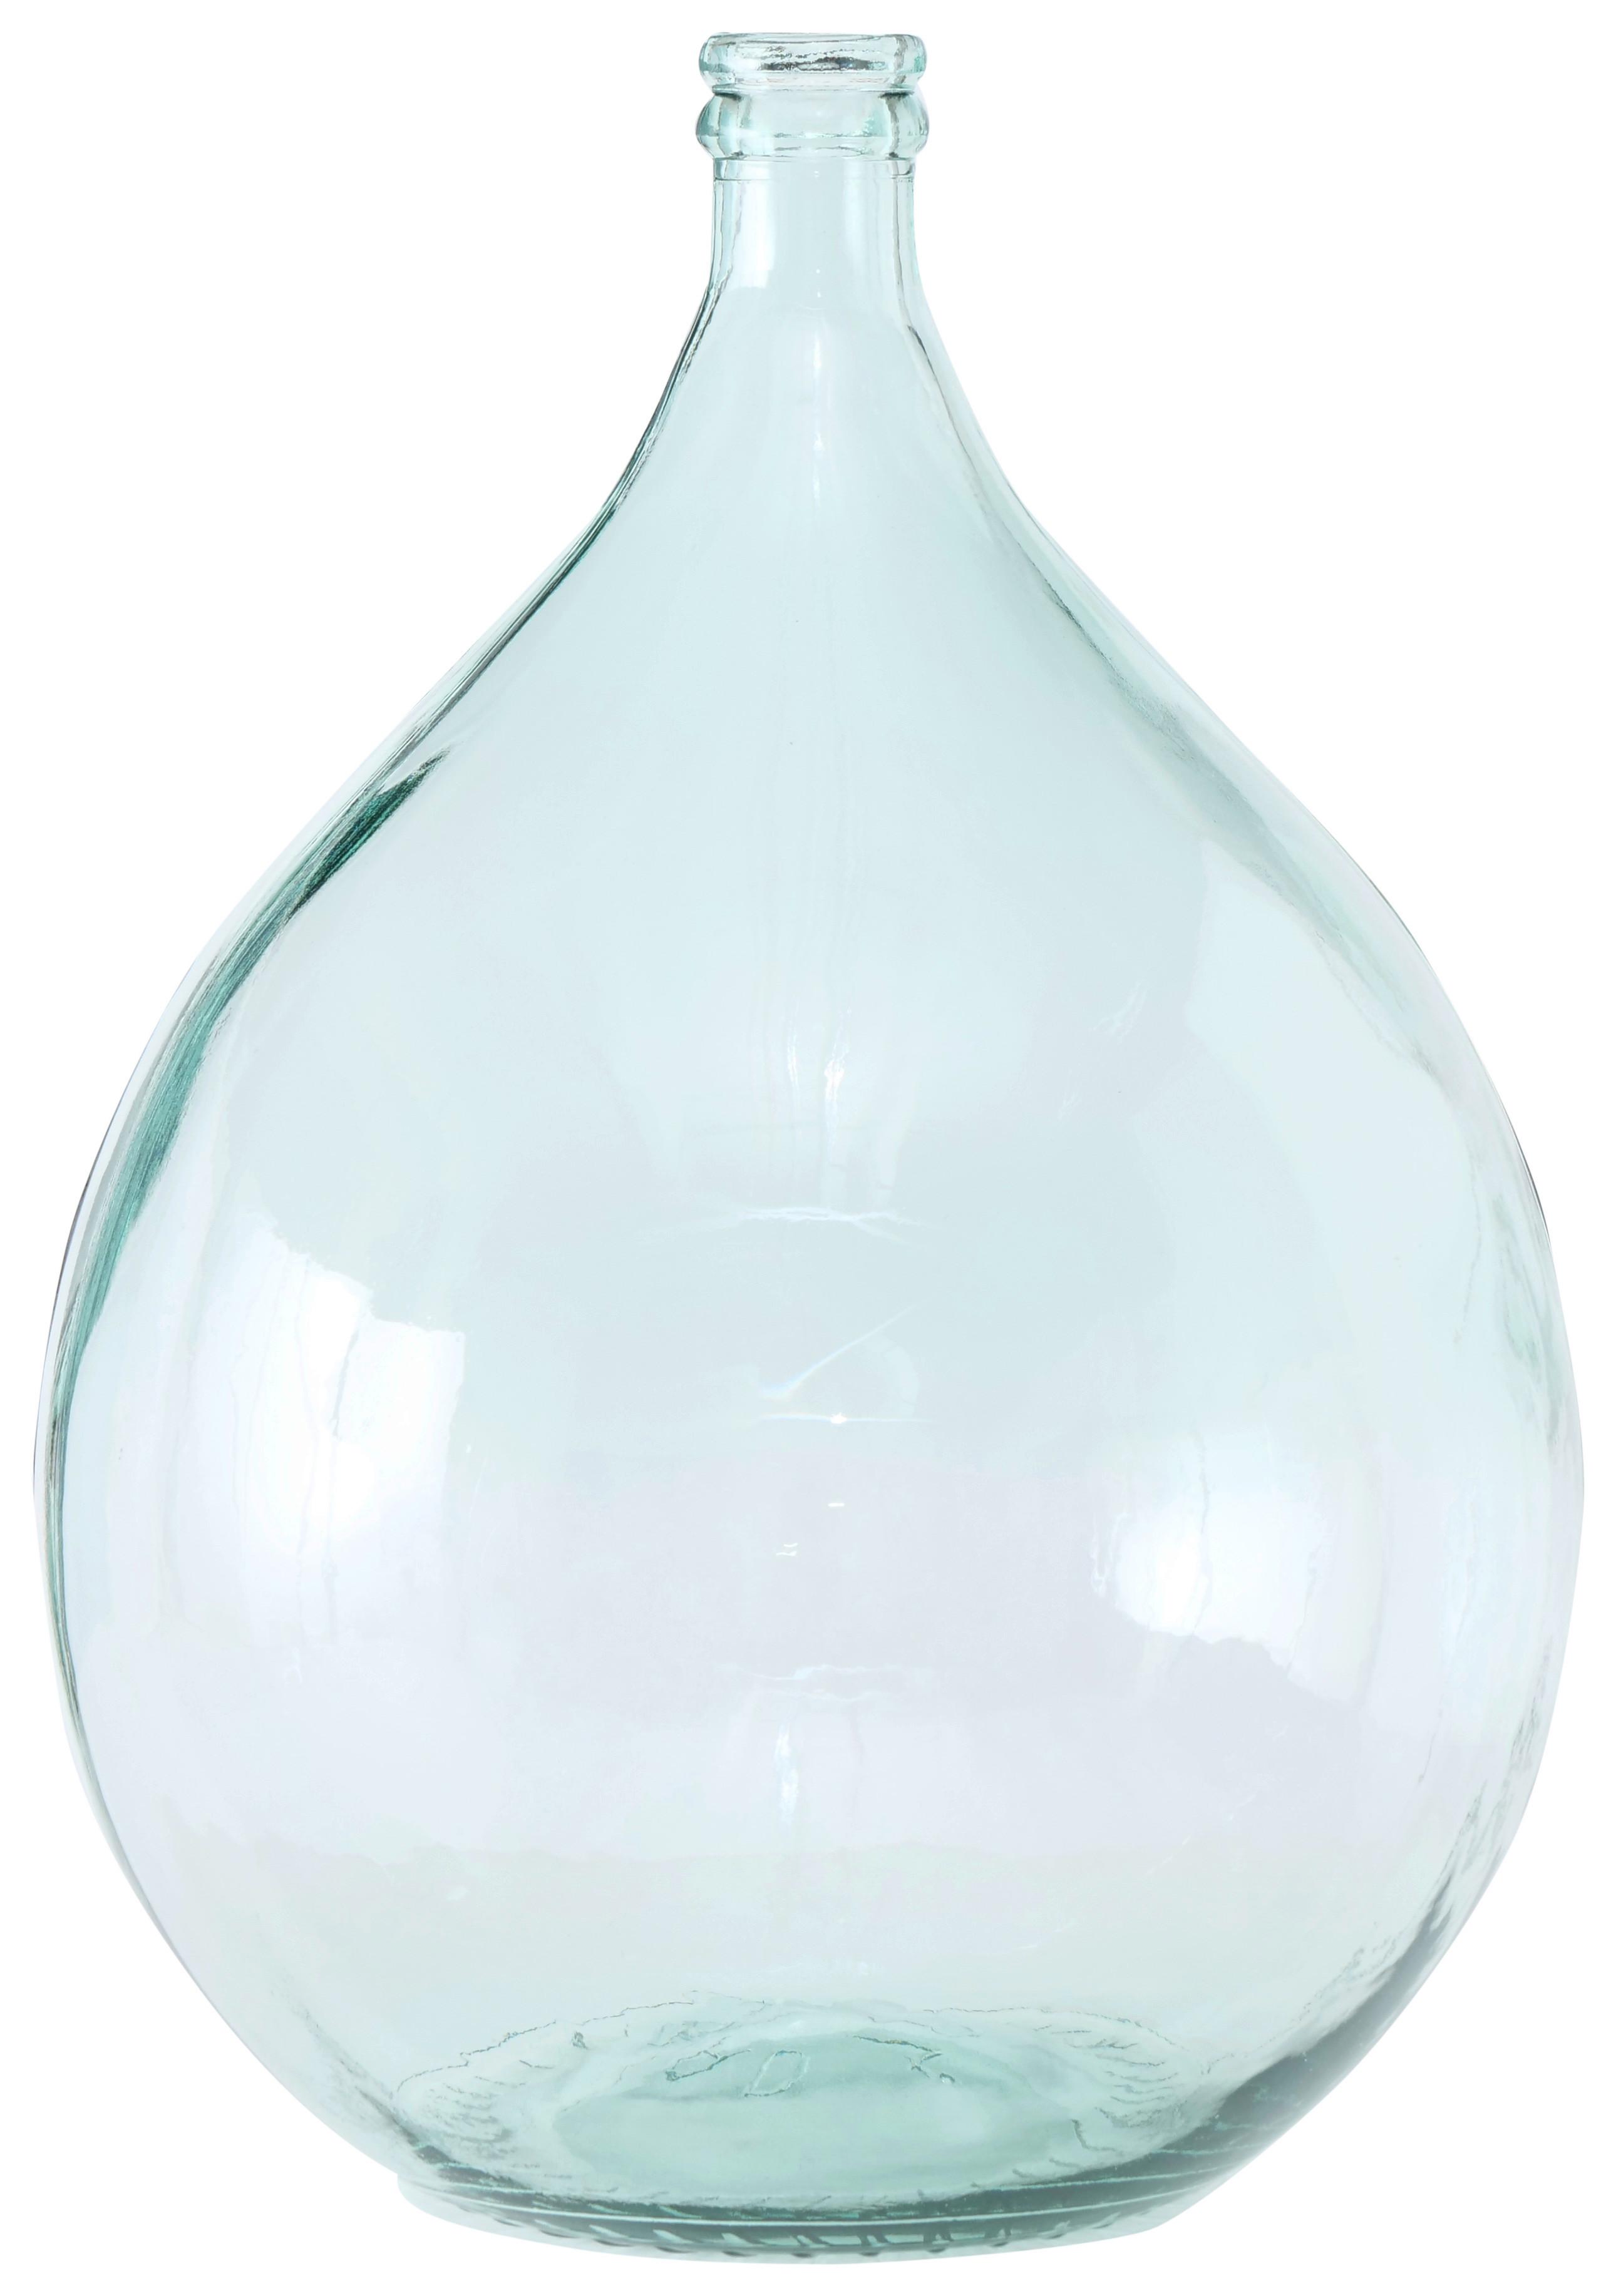 Vaza Nalani I -Paz- - svetlo modra/prozorno, Basics, steklo (40/56cm) - Premium Living